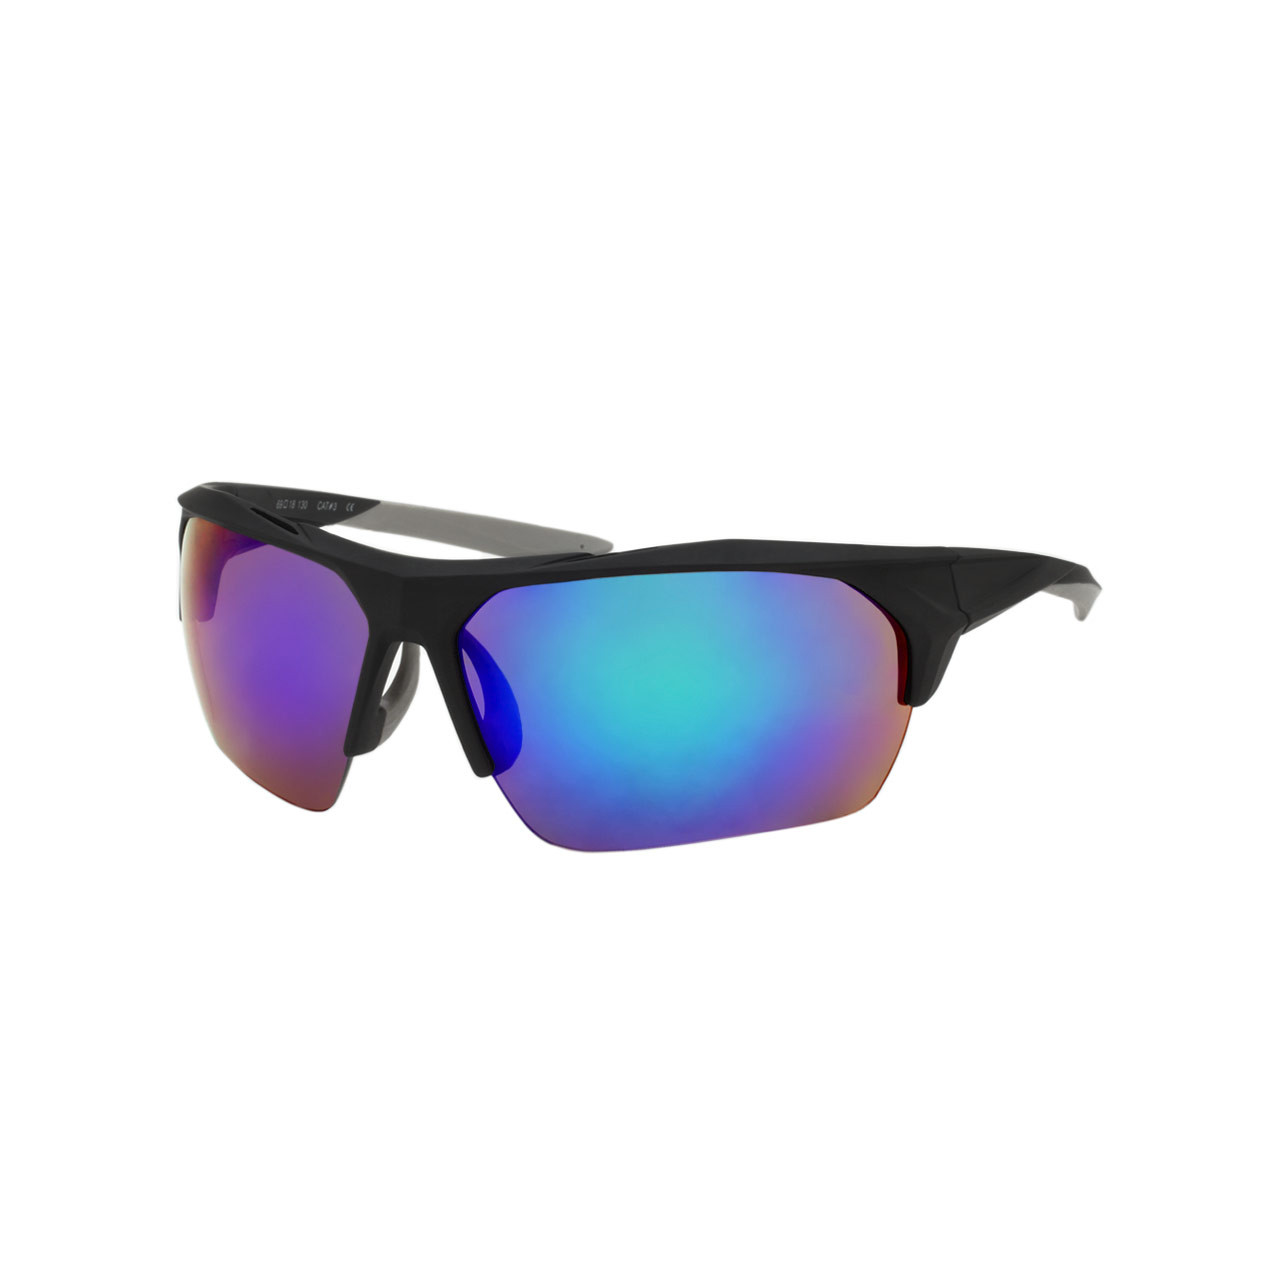 MENS SPORT SUNGLASSES WHOLESALE I ASSTD. 12 PCS I GY05 - Shark Eyes, Inc. -  Wholesale Sunglasses, Reading Glasses, & Displays